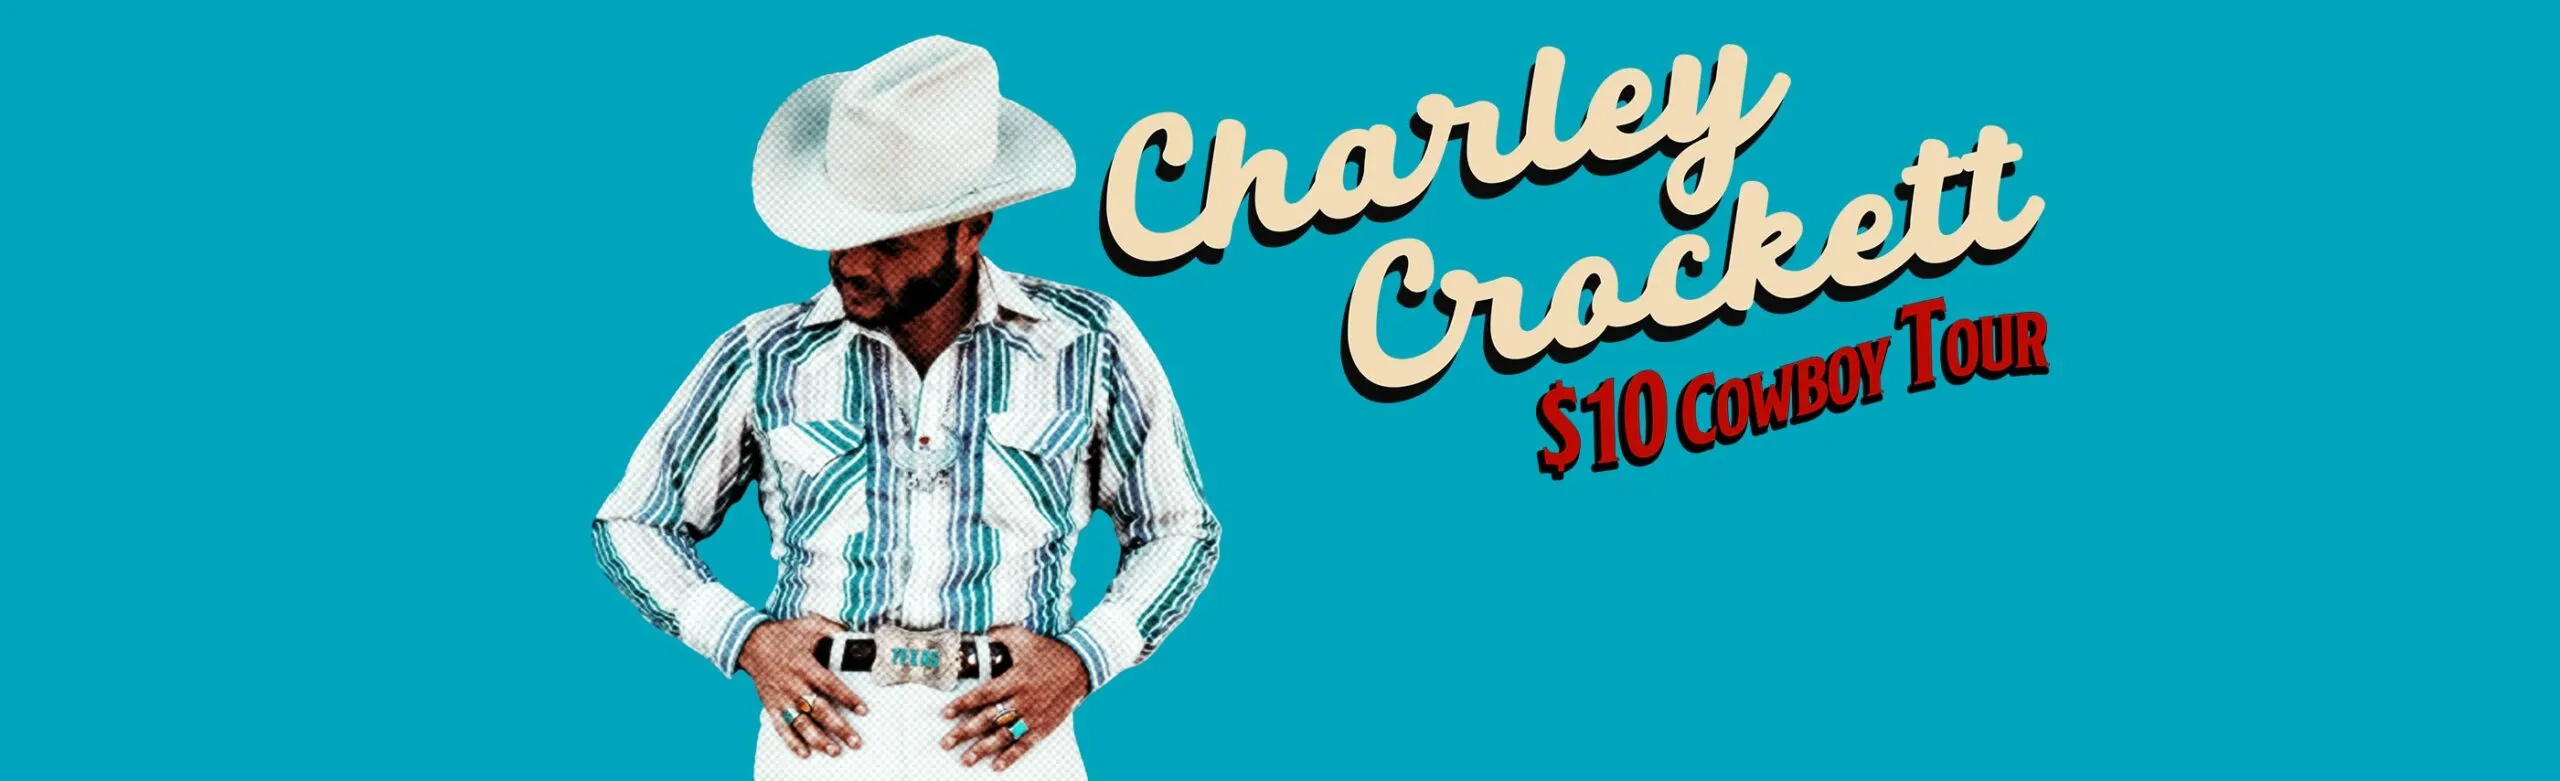 Charley Crockett – 2 Day Pass